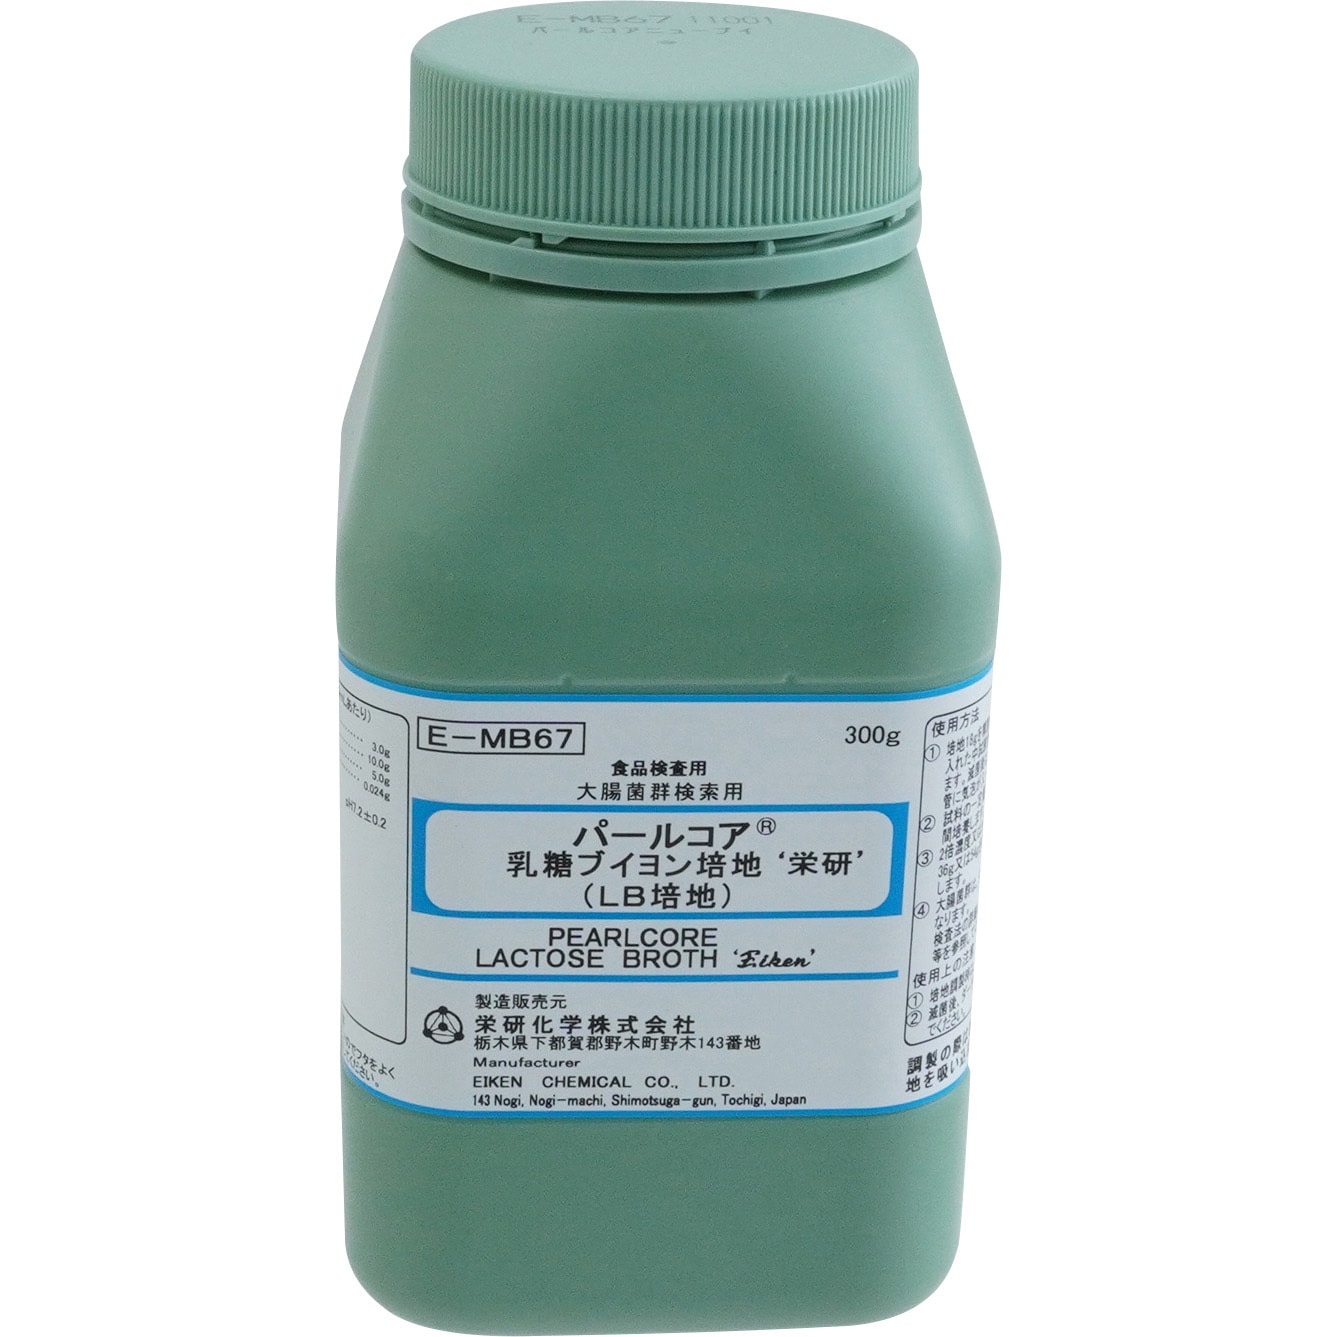 E-MB67 粉末培地 パールコア ボトル顆粒 1個(300g) 栄研化学 【通販